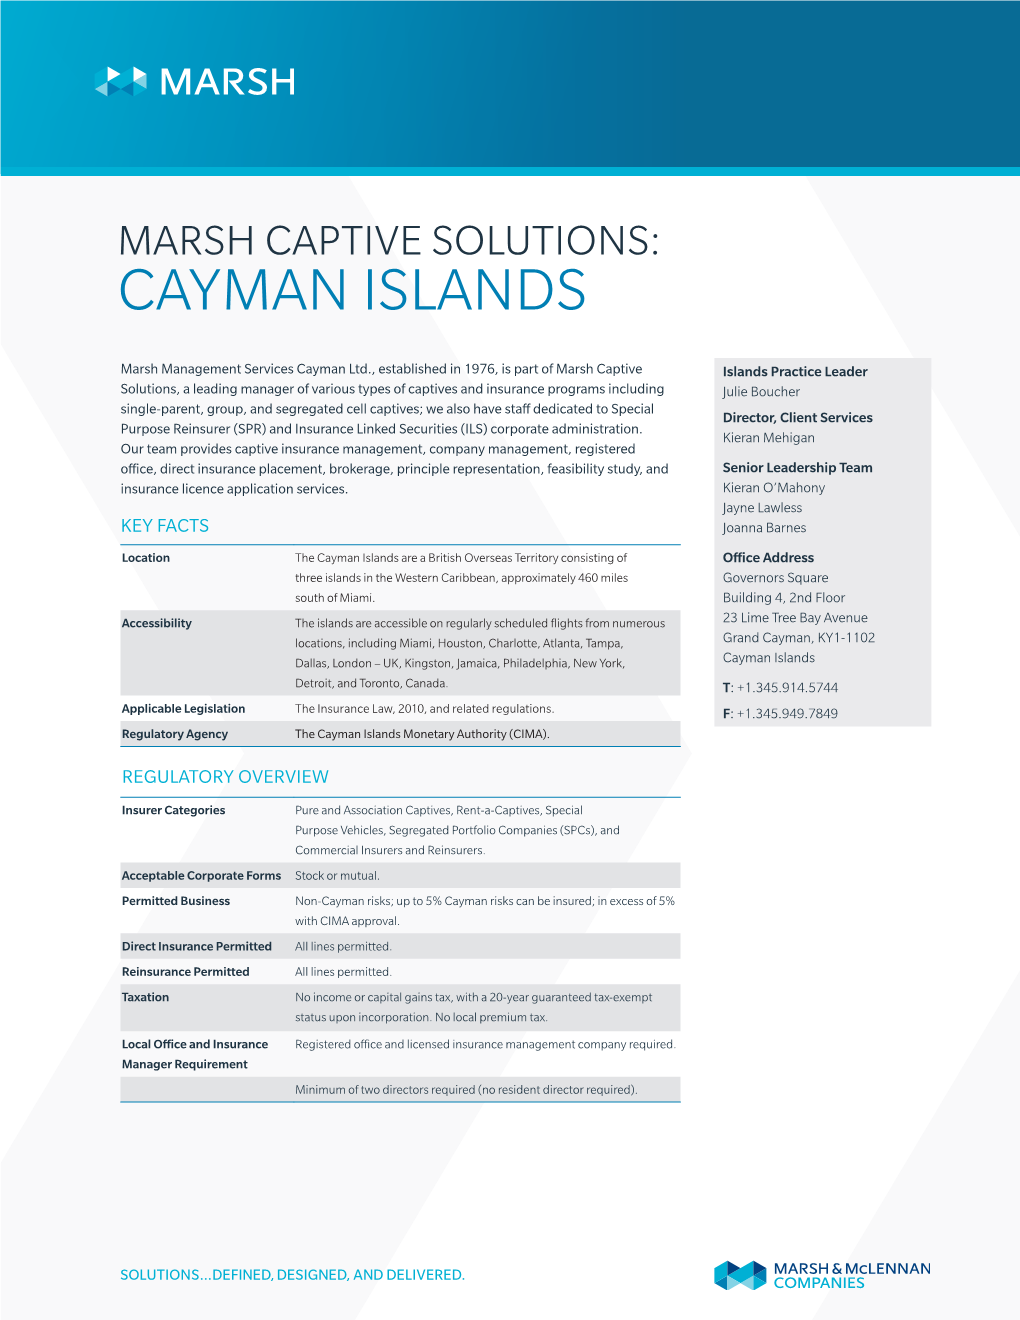 Marsh Captive Solutions: Cayman Islands